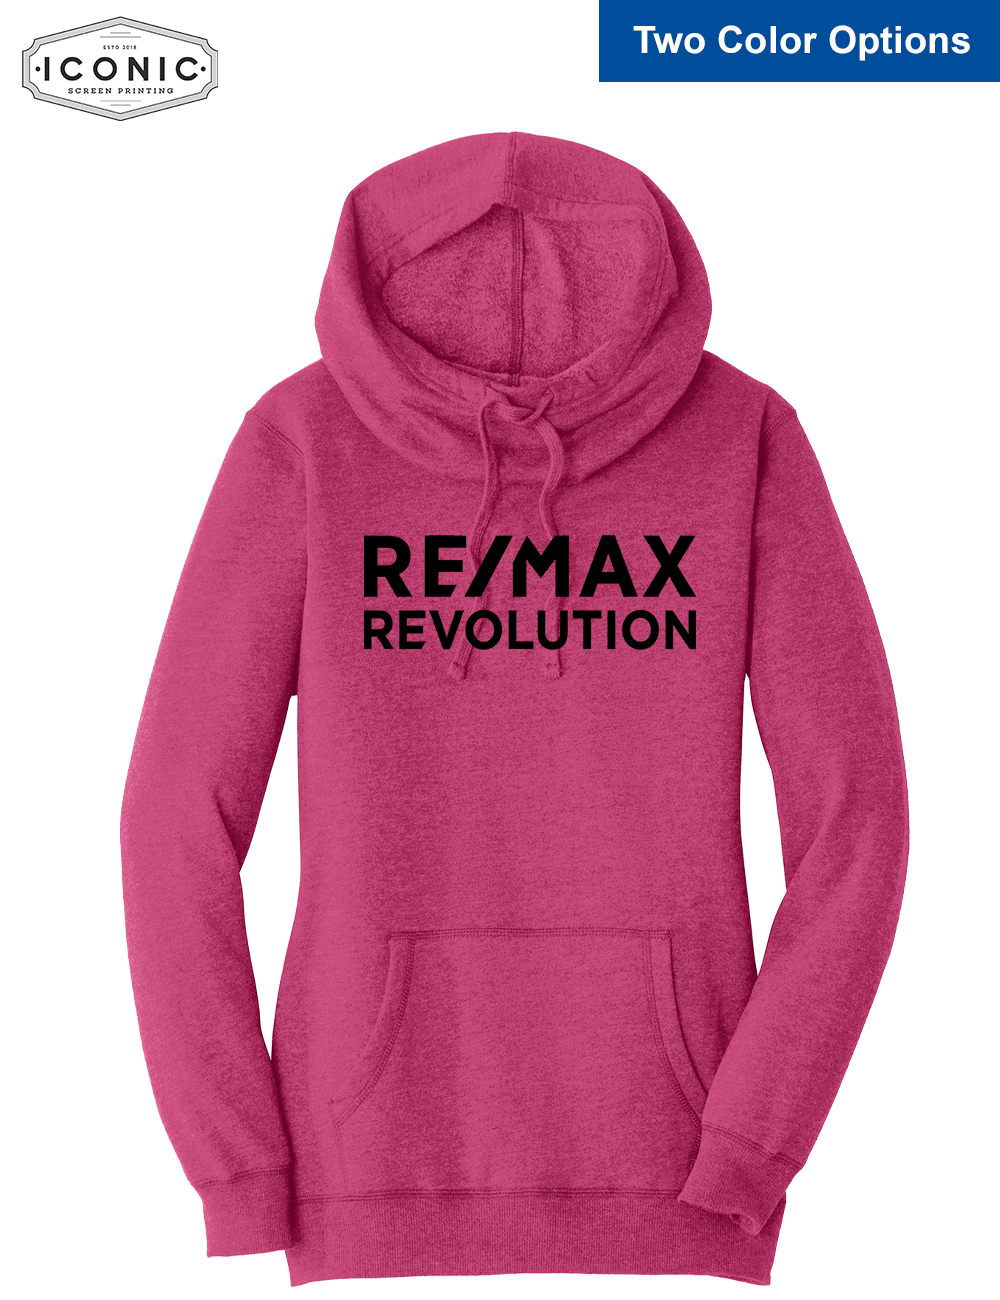 RE/MAX Revolution - District Women’s Lightweight Fleece Hoodie - Print